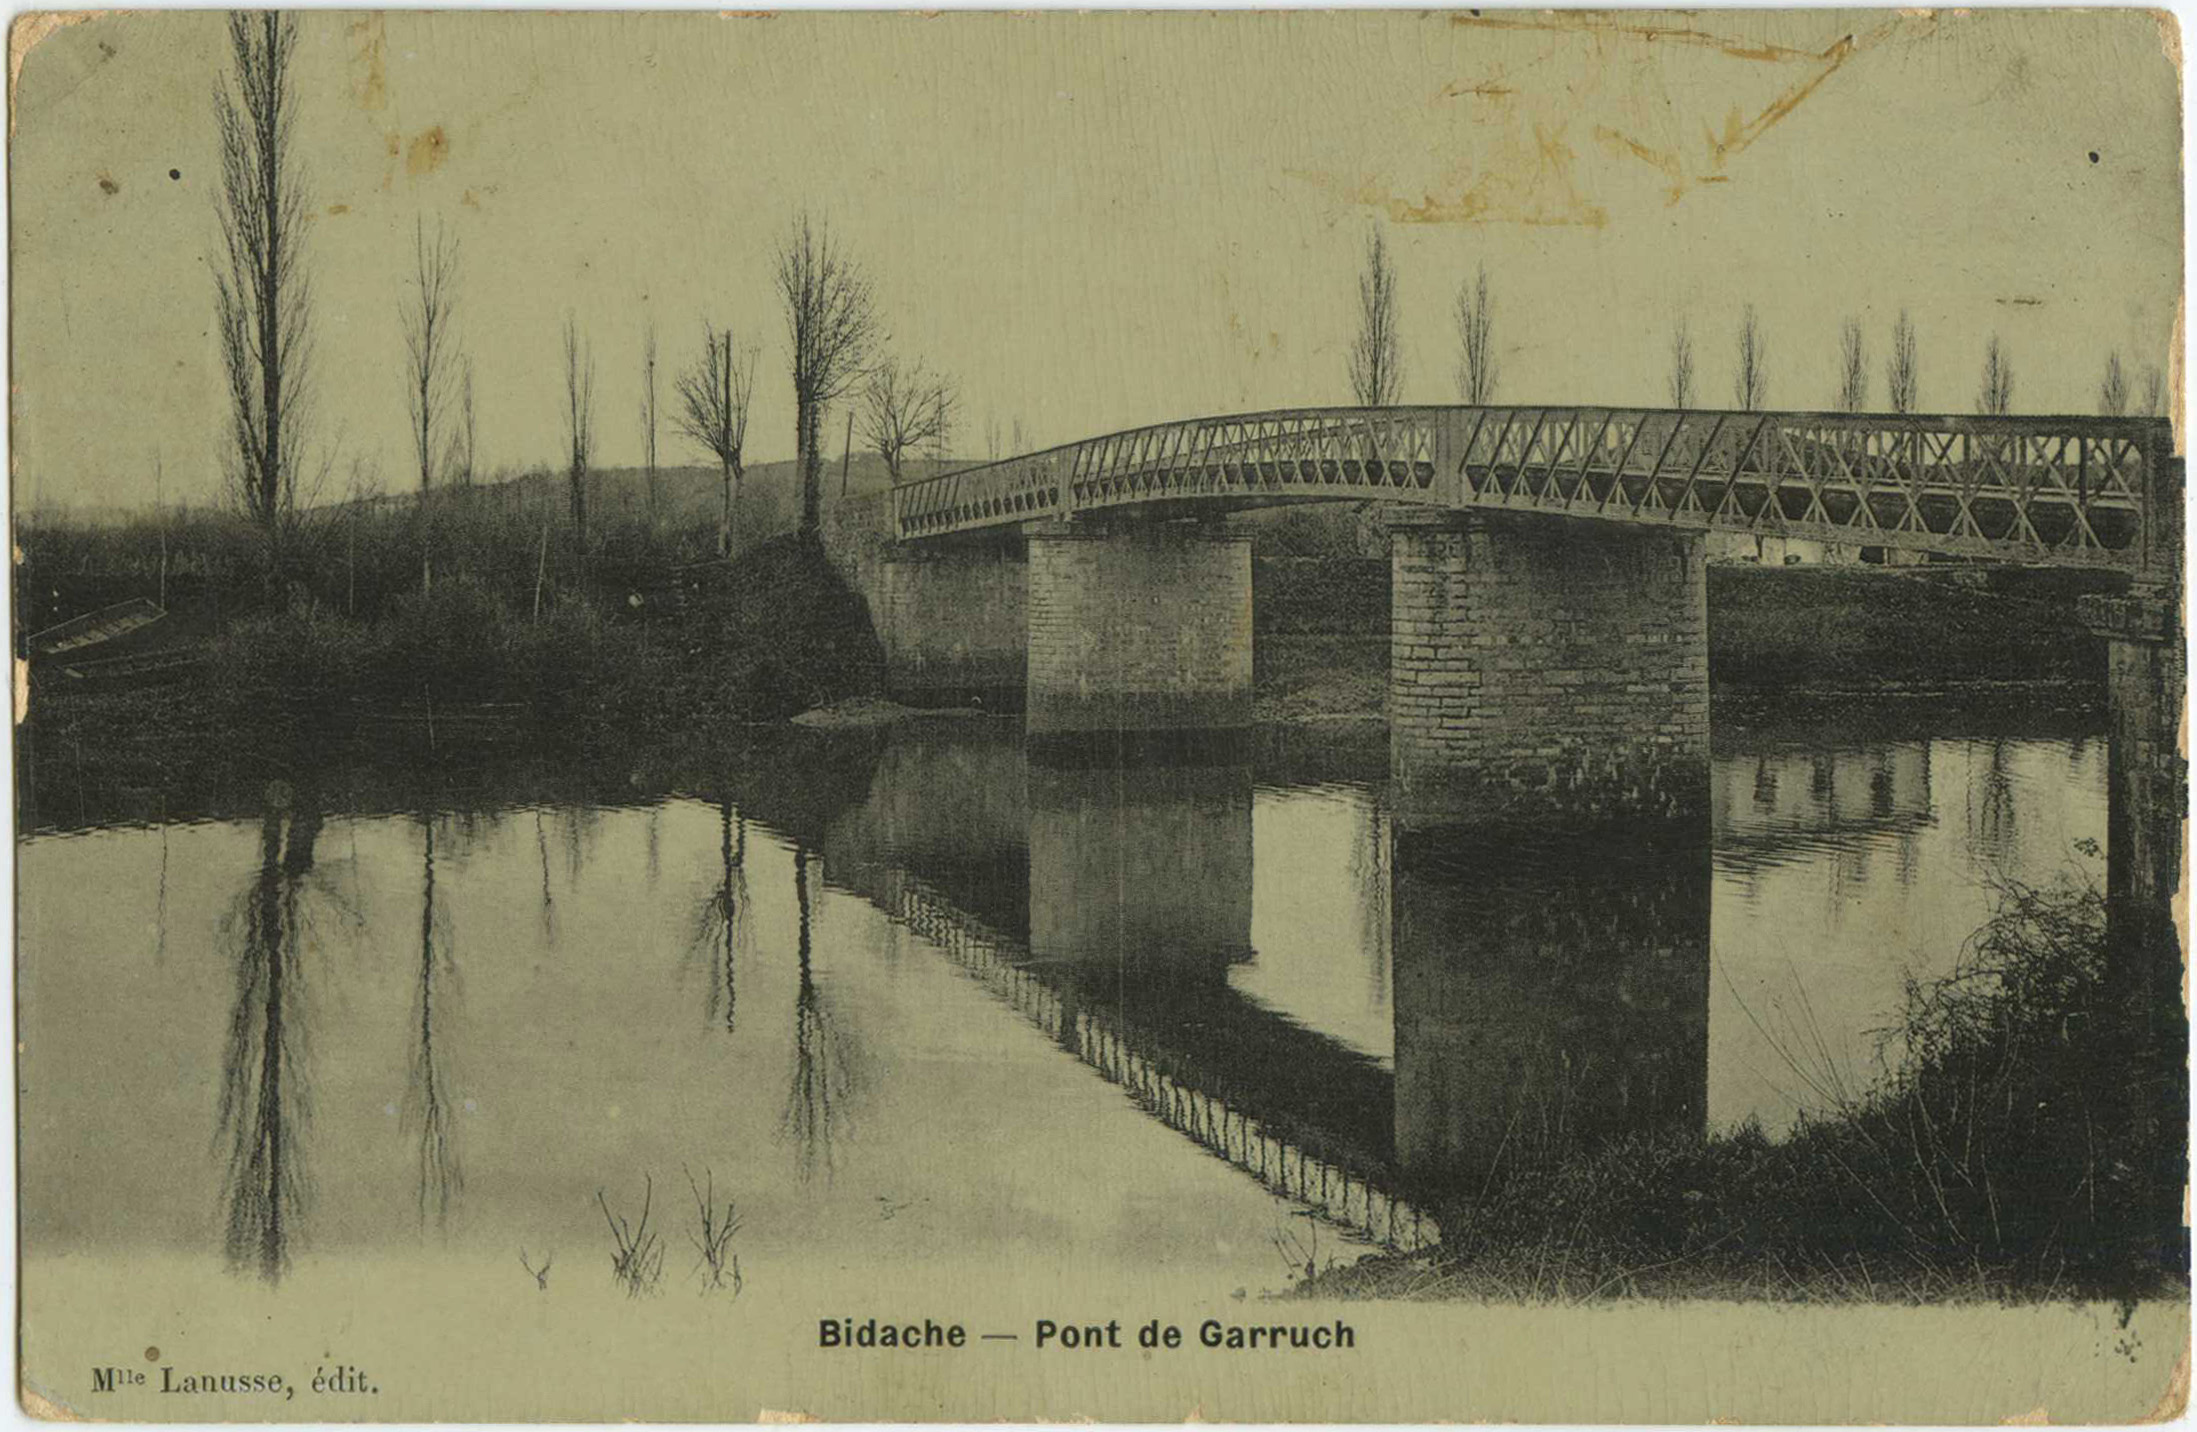 Bidache - Pont de Garruch